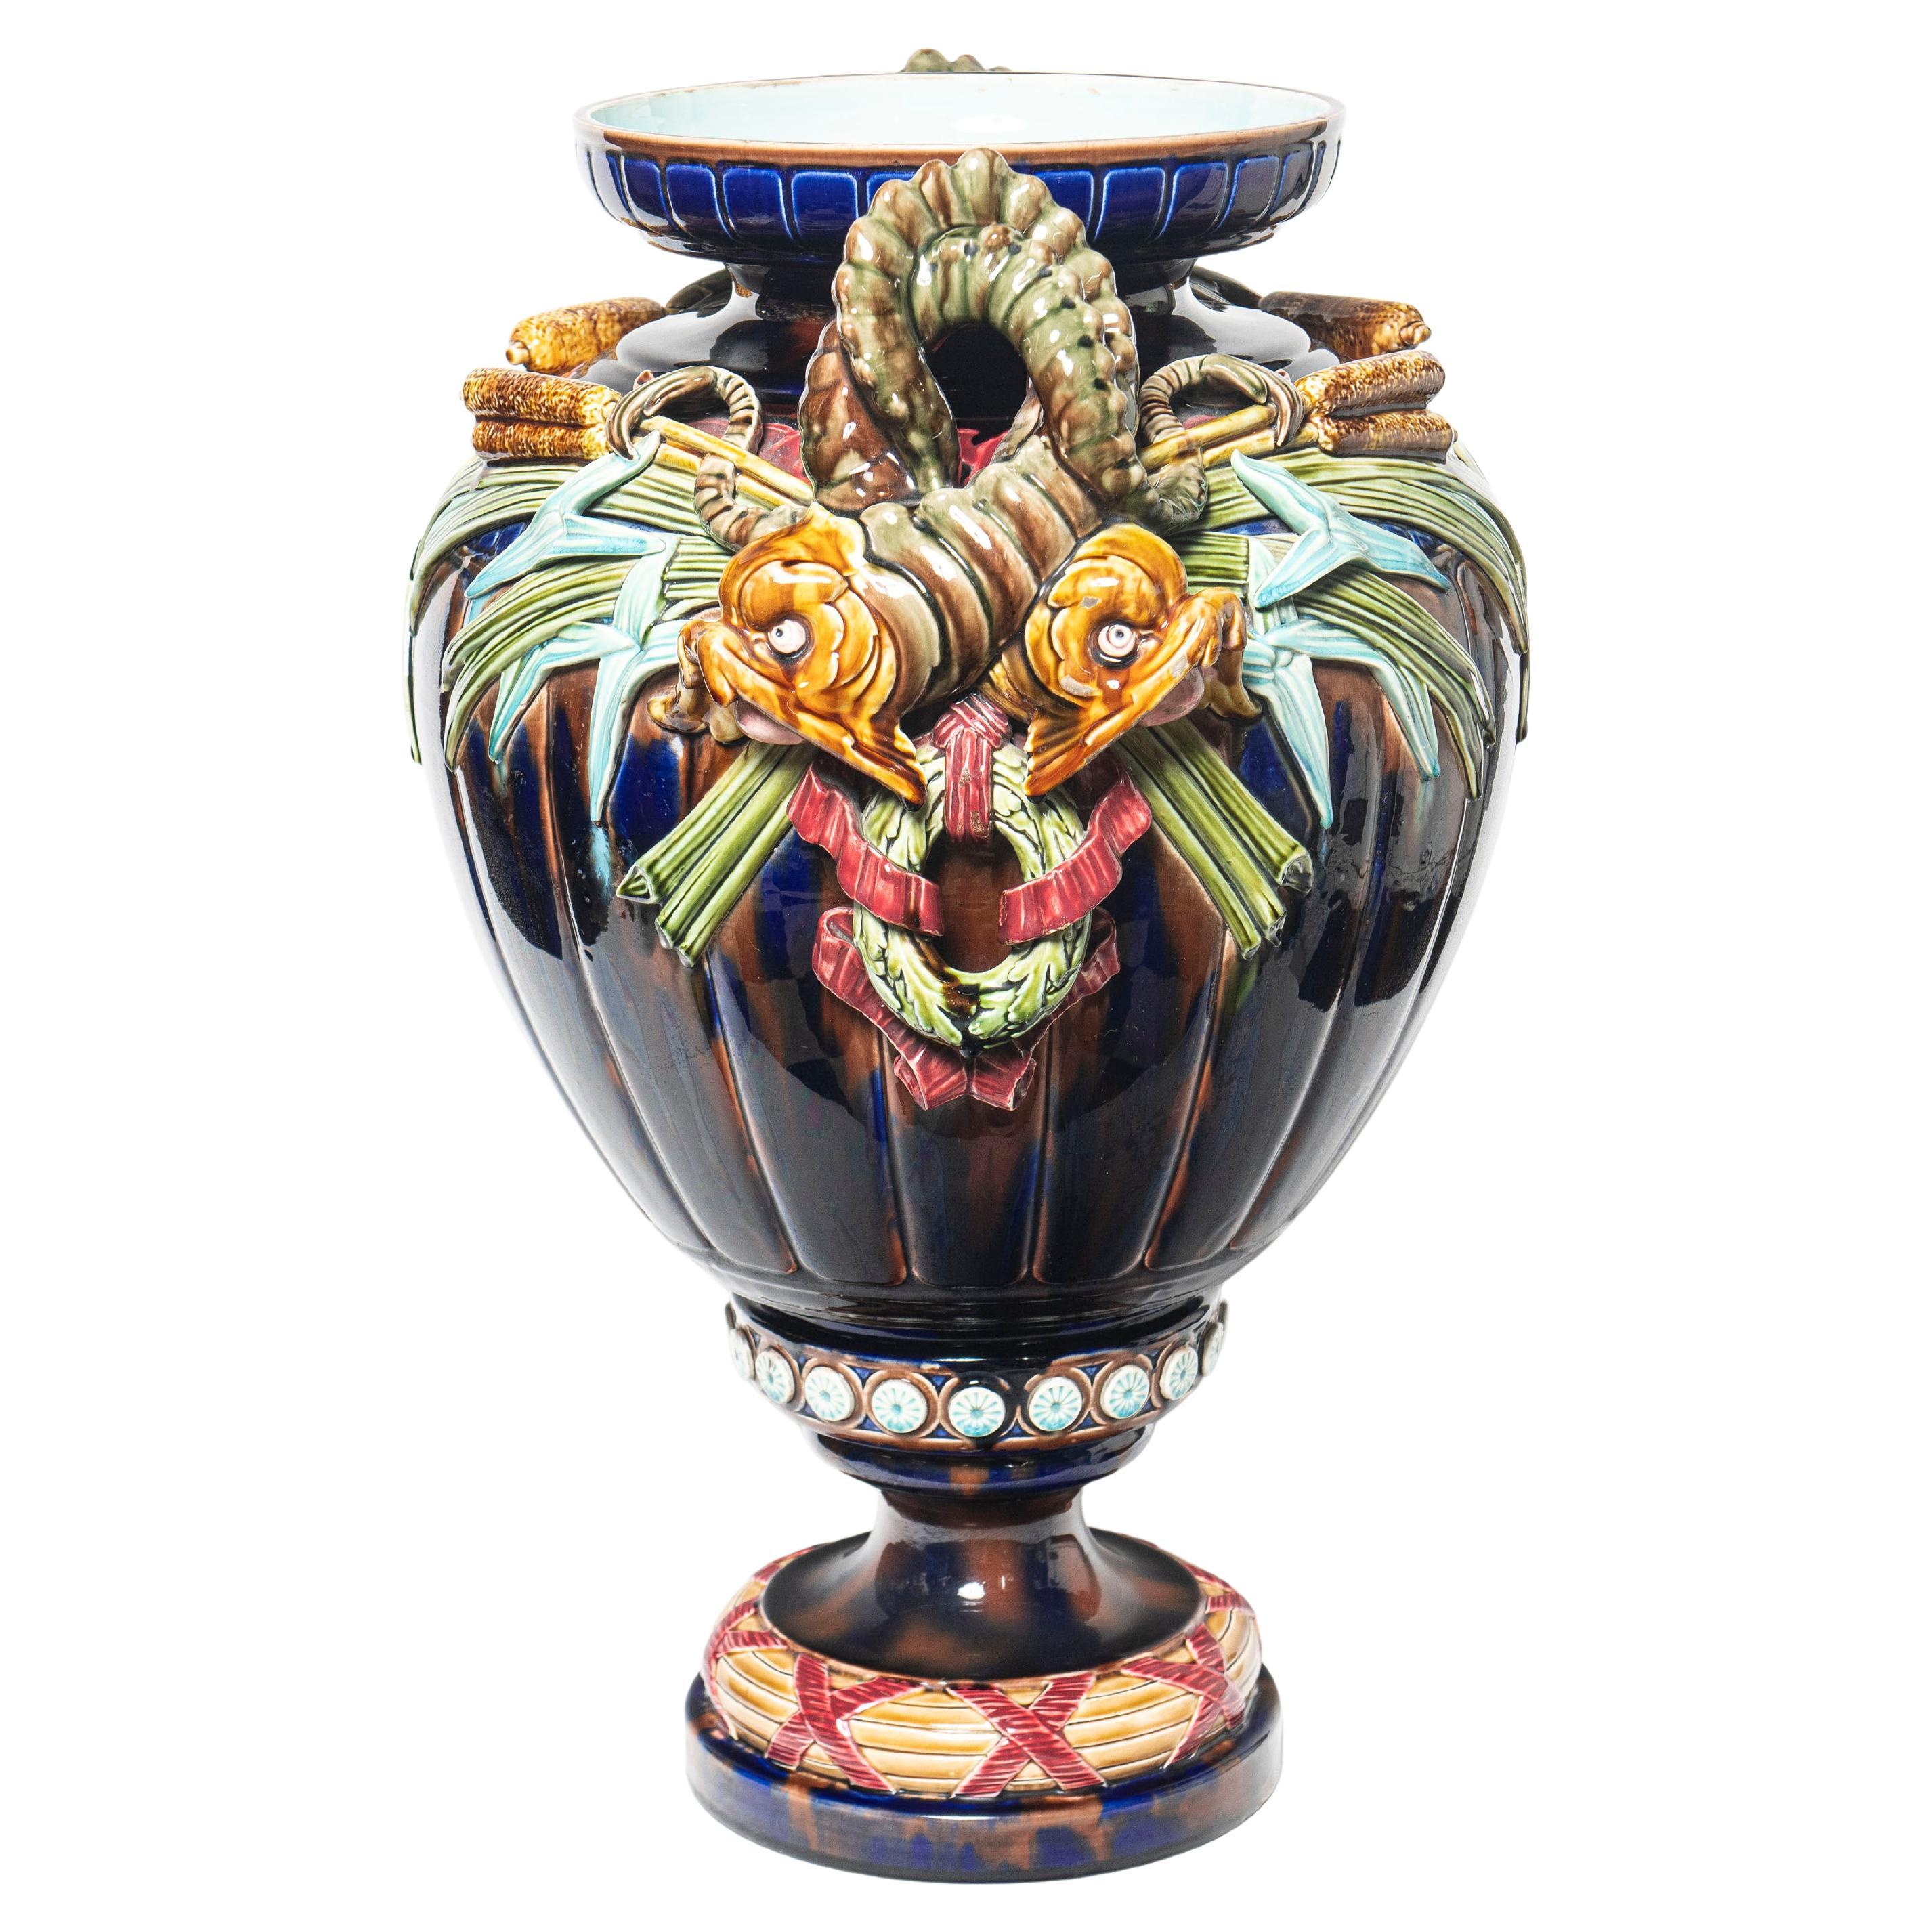 Ceramic Vase Attributted to Sarreguemines, Art Nouveau Period, France, C. 1890